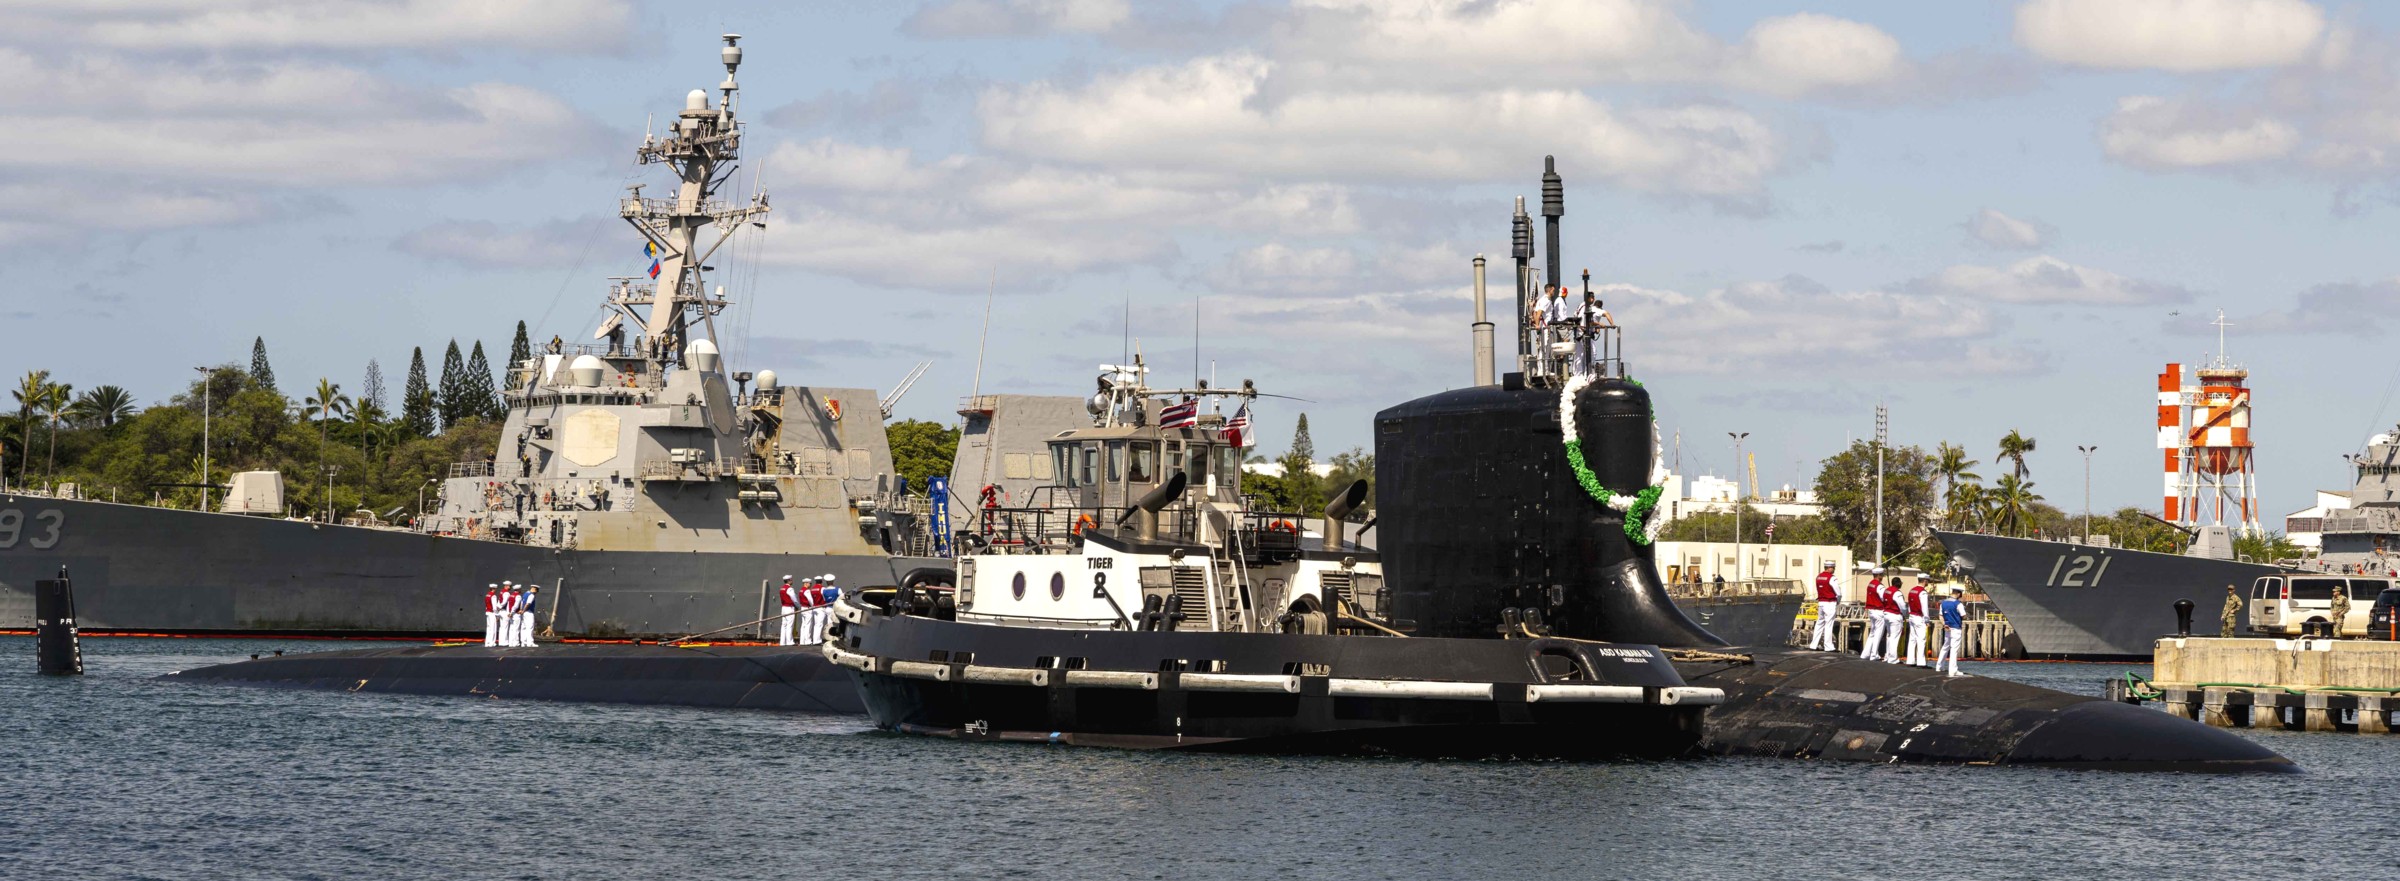 ssn-792 uss vermont virginia class attack submarine us navy pearl harbor hawaii 17